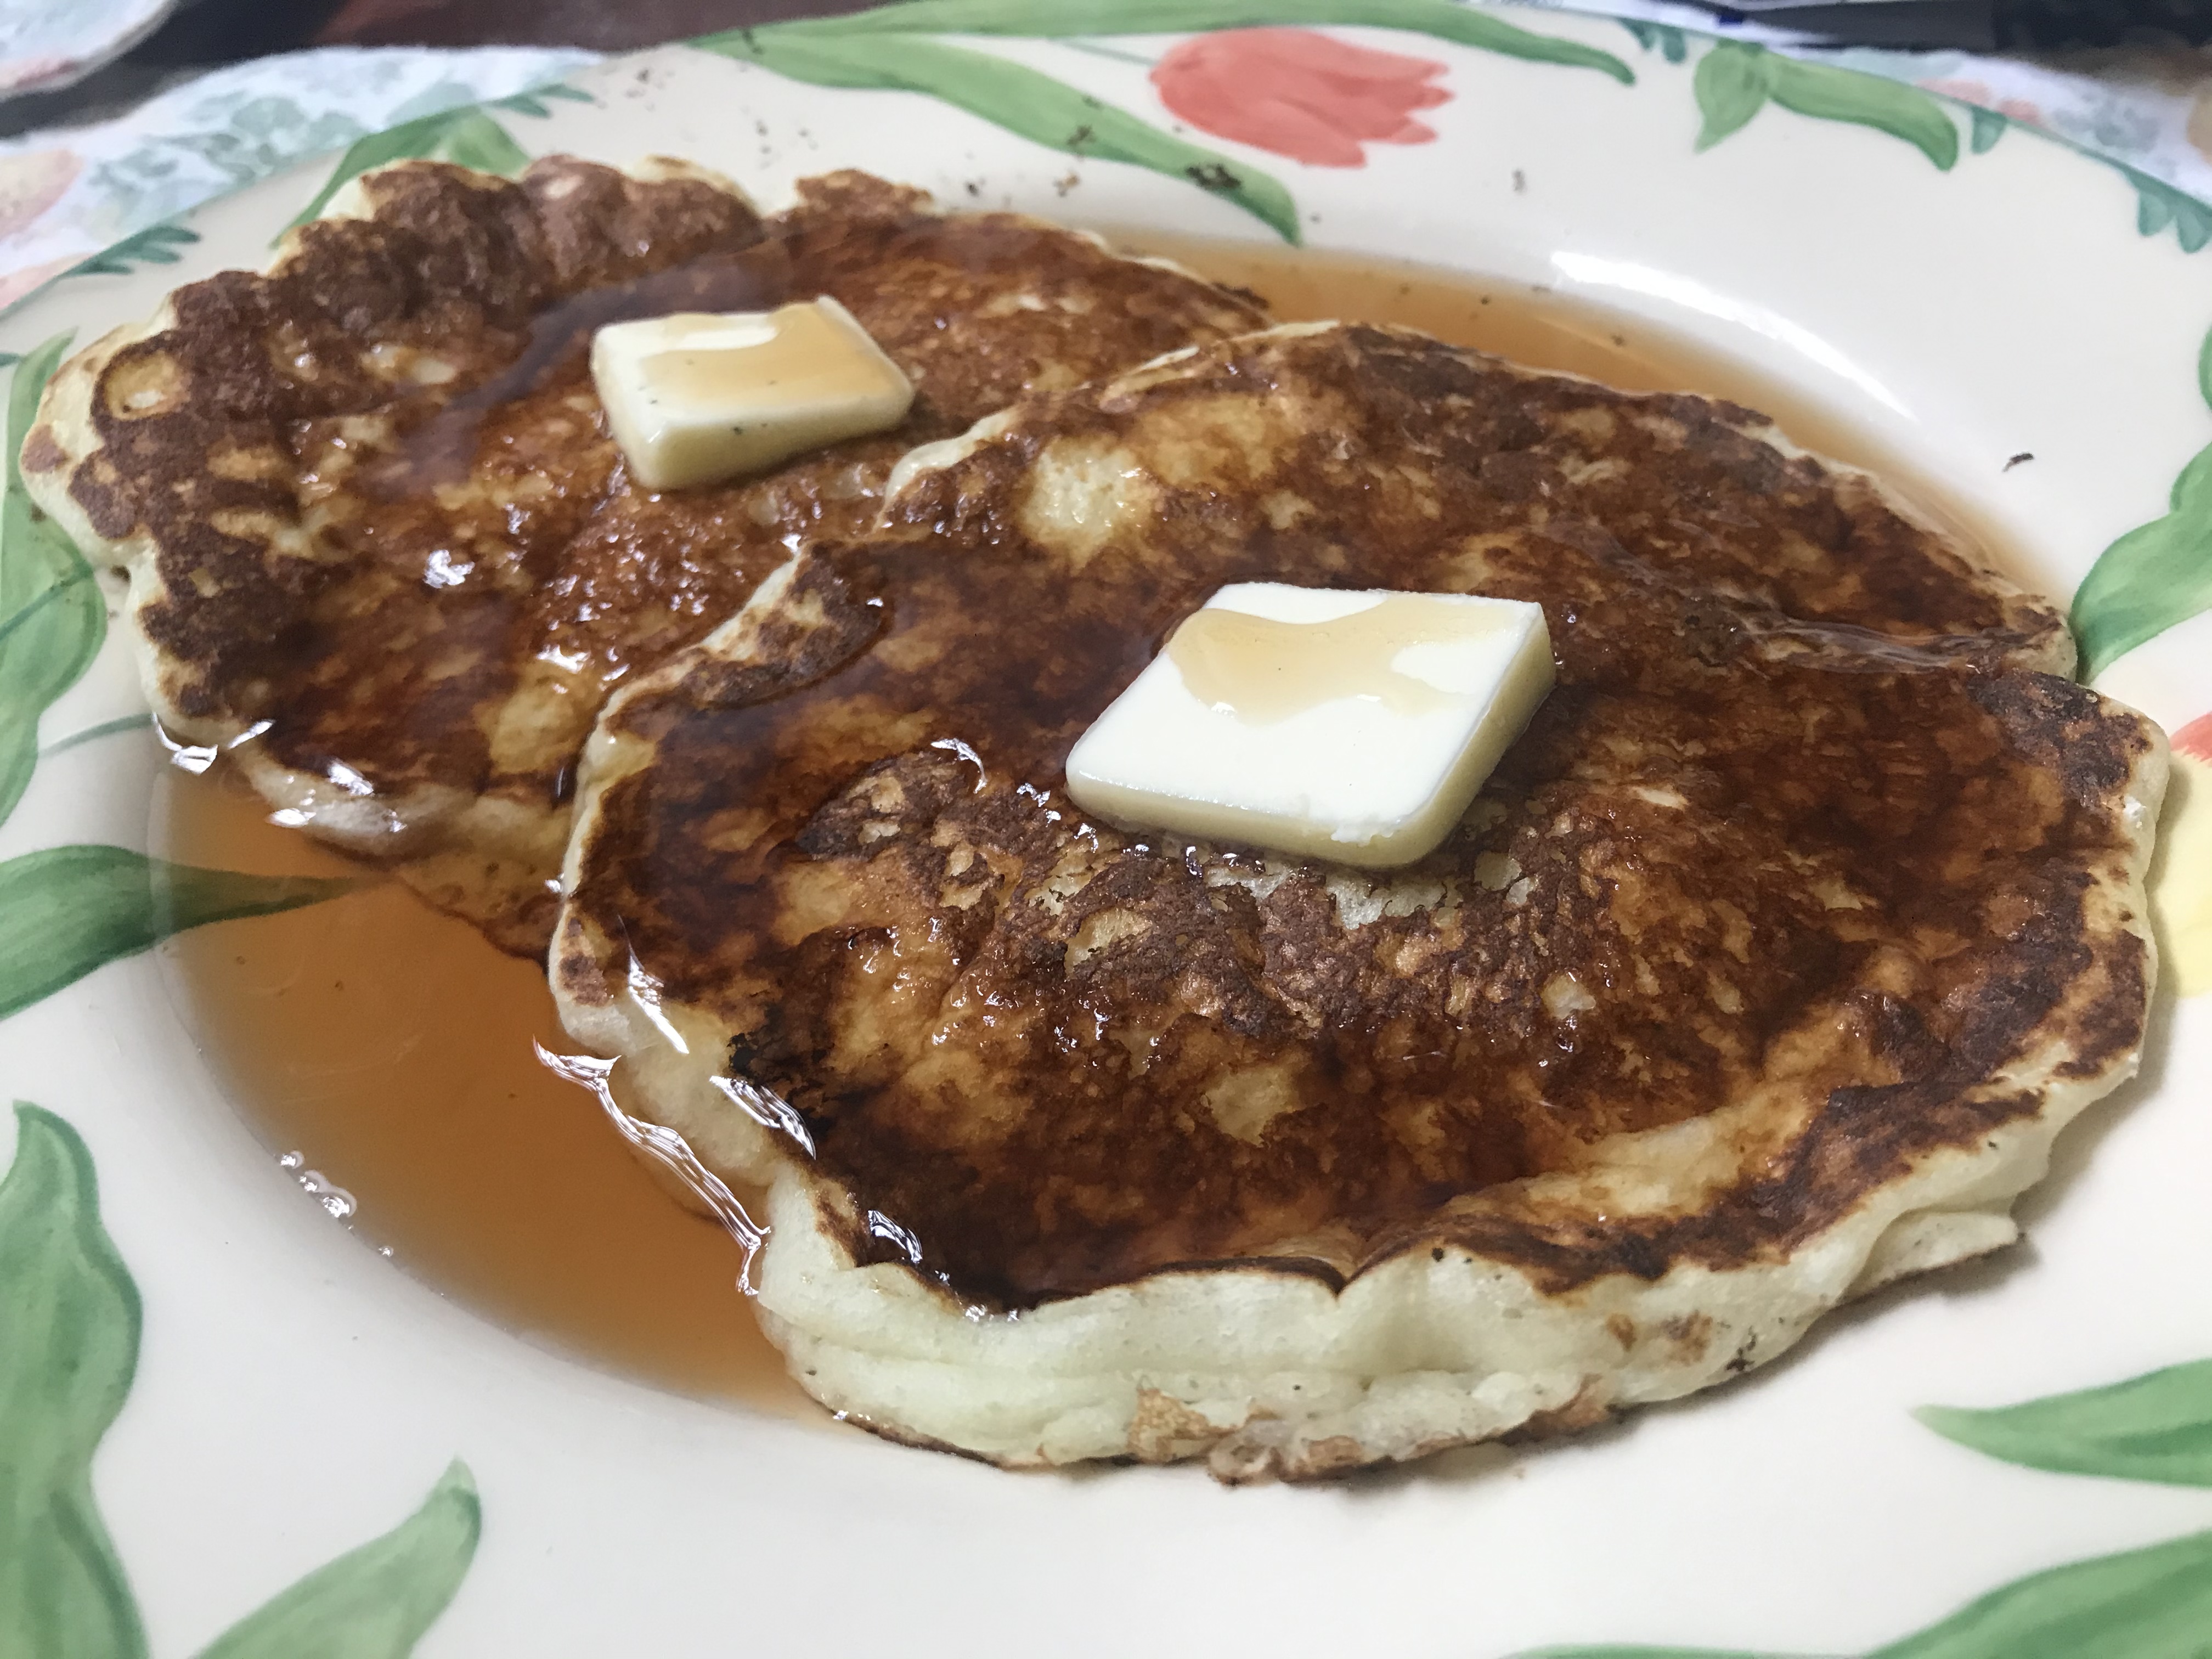 Mom's Buttermilk Pancakes 